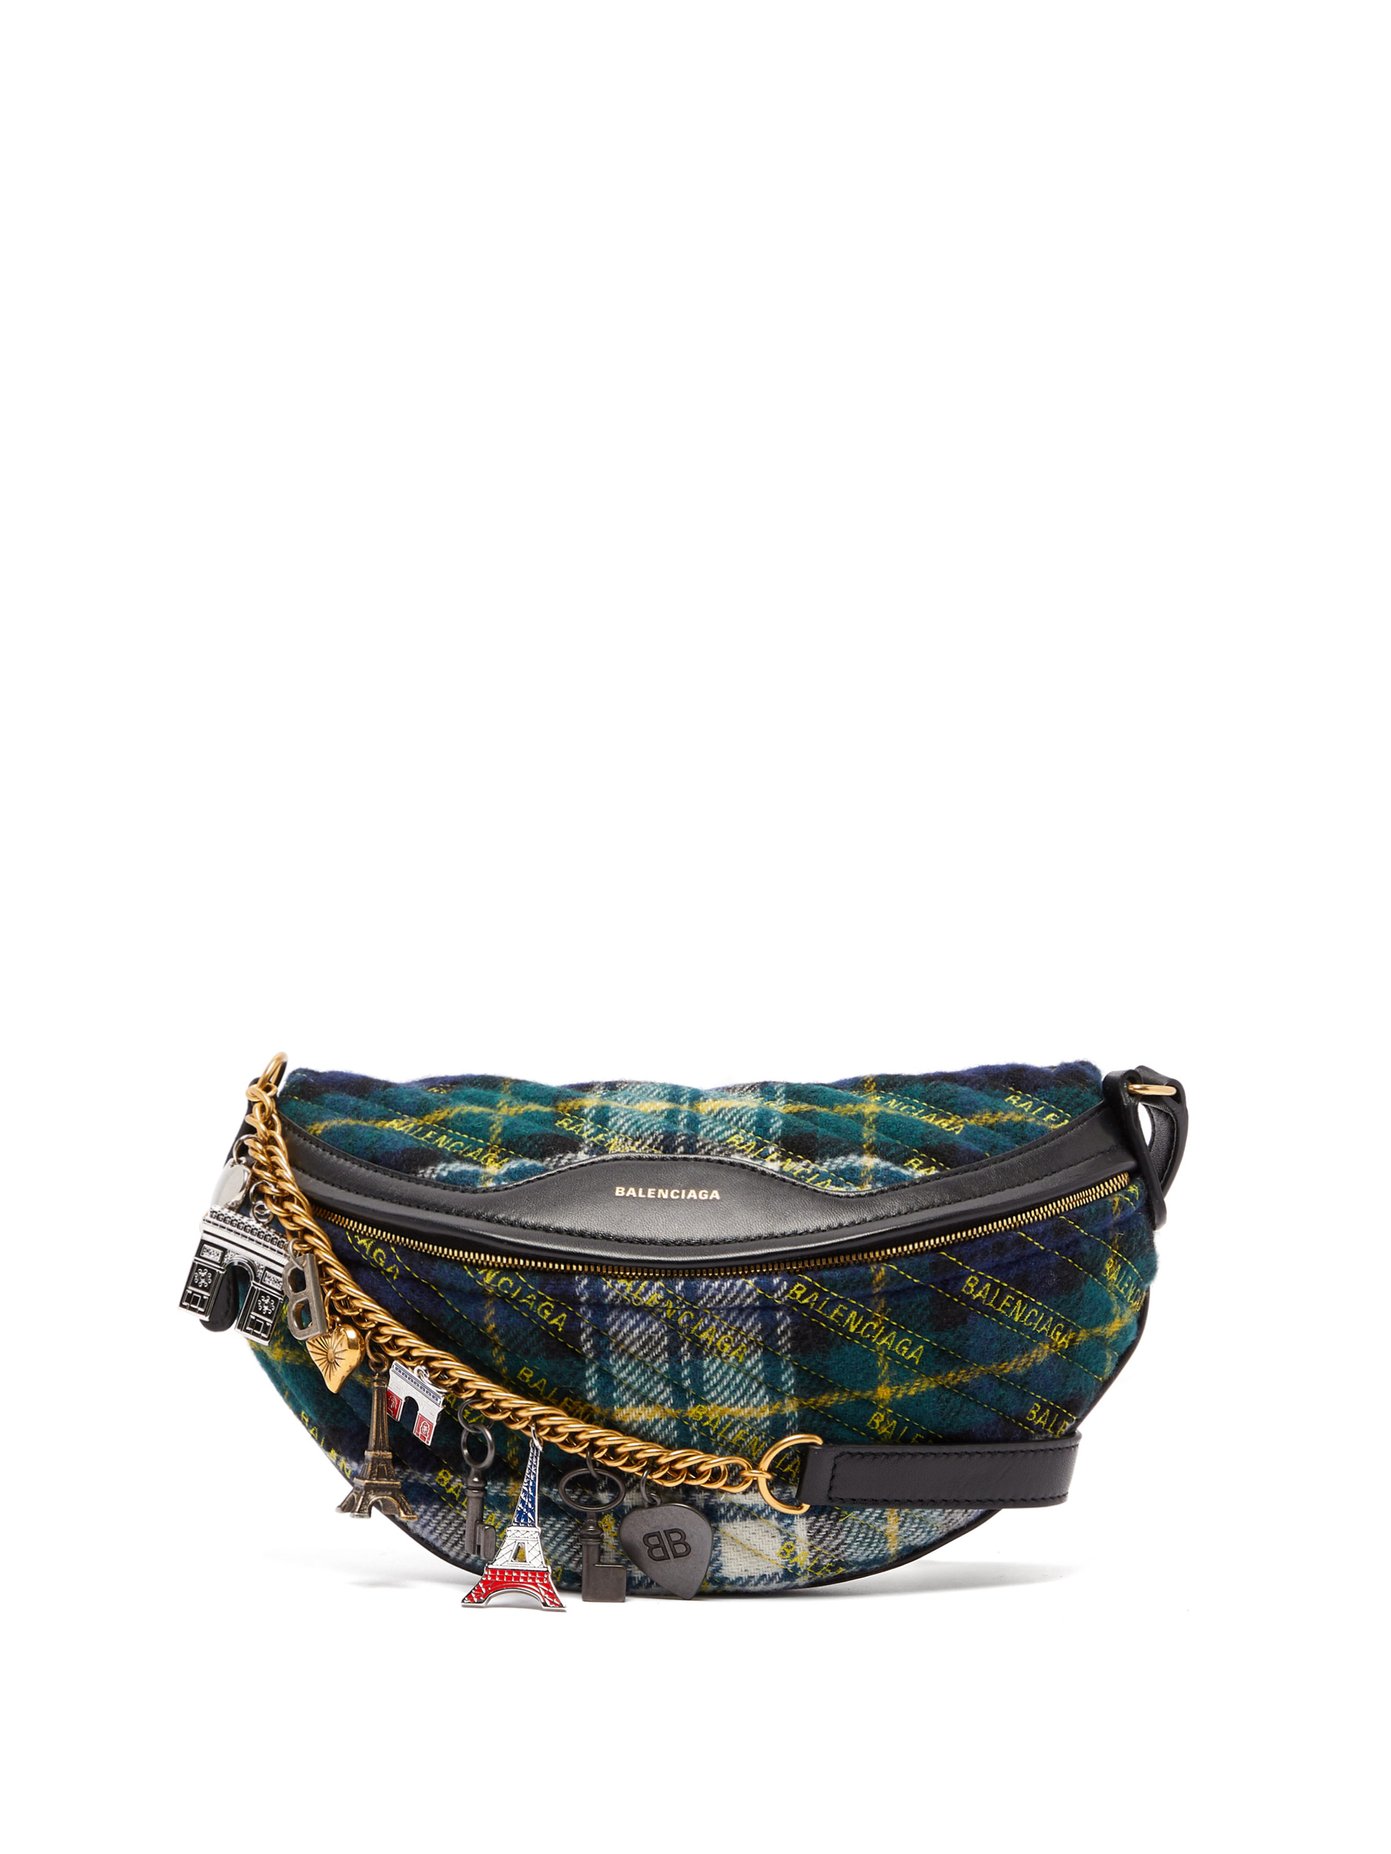 Souvenir XS belt bag | Balenciaga 